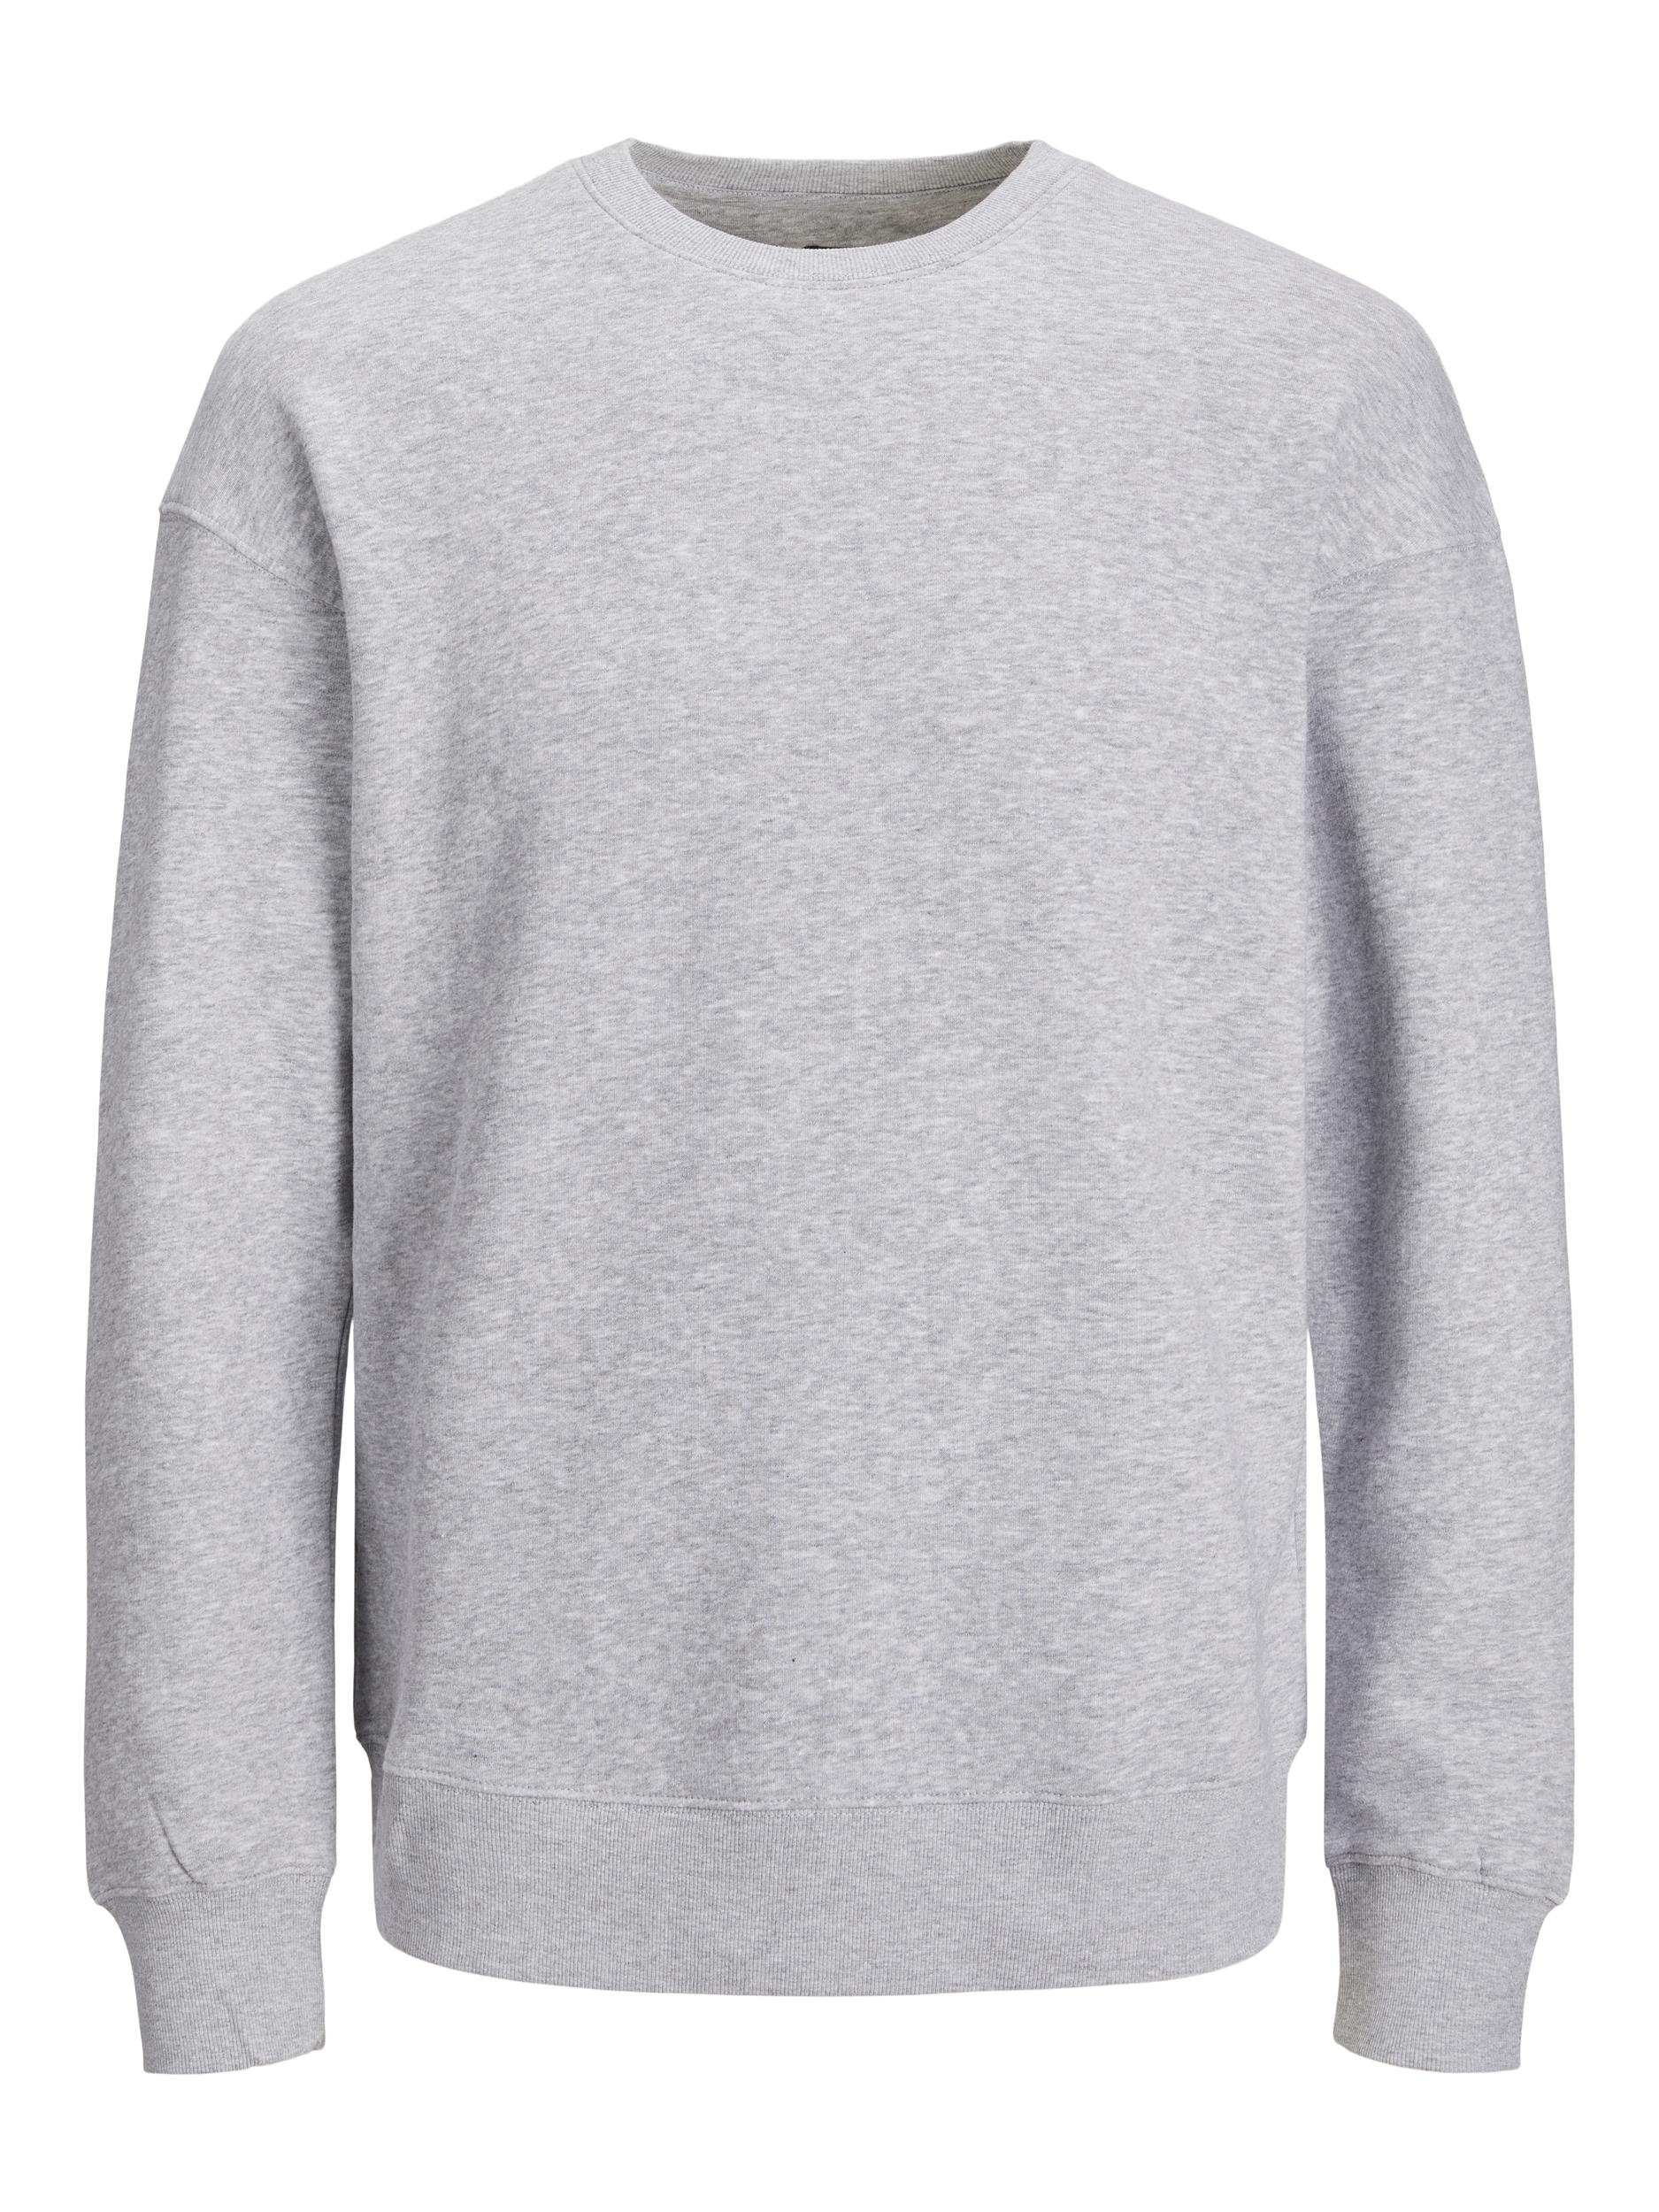 Jack & Jones PlusSize Grey Light CREW JJEBRADLEY PLS NOOS Sweatshirt SWEAT Melange